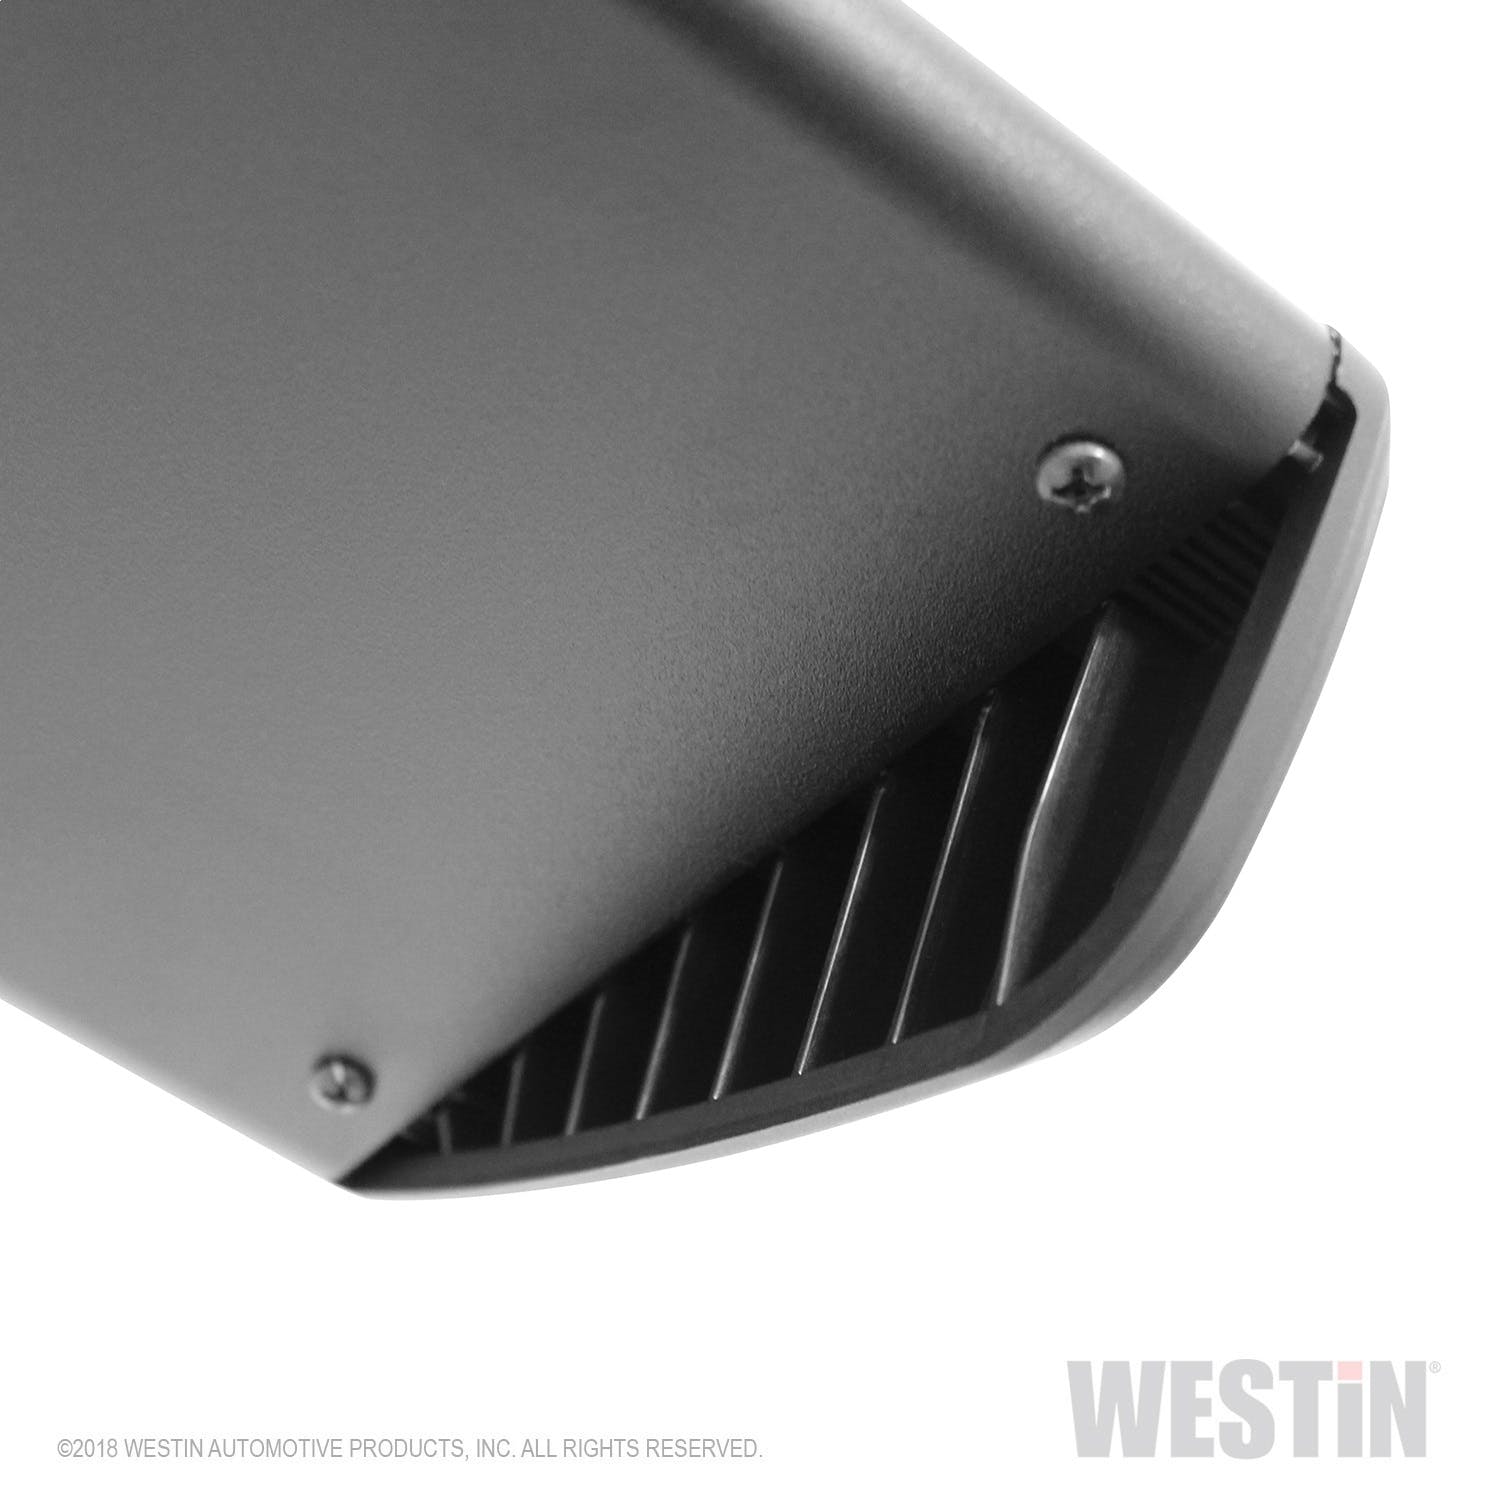 Westin Automotive 28-71225 R7 Nerf Step Bars Black